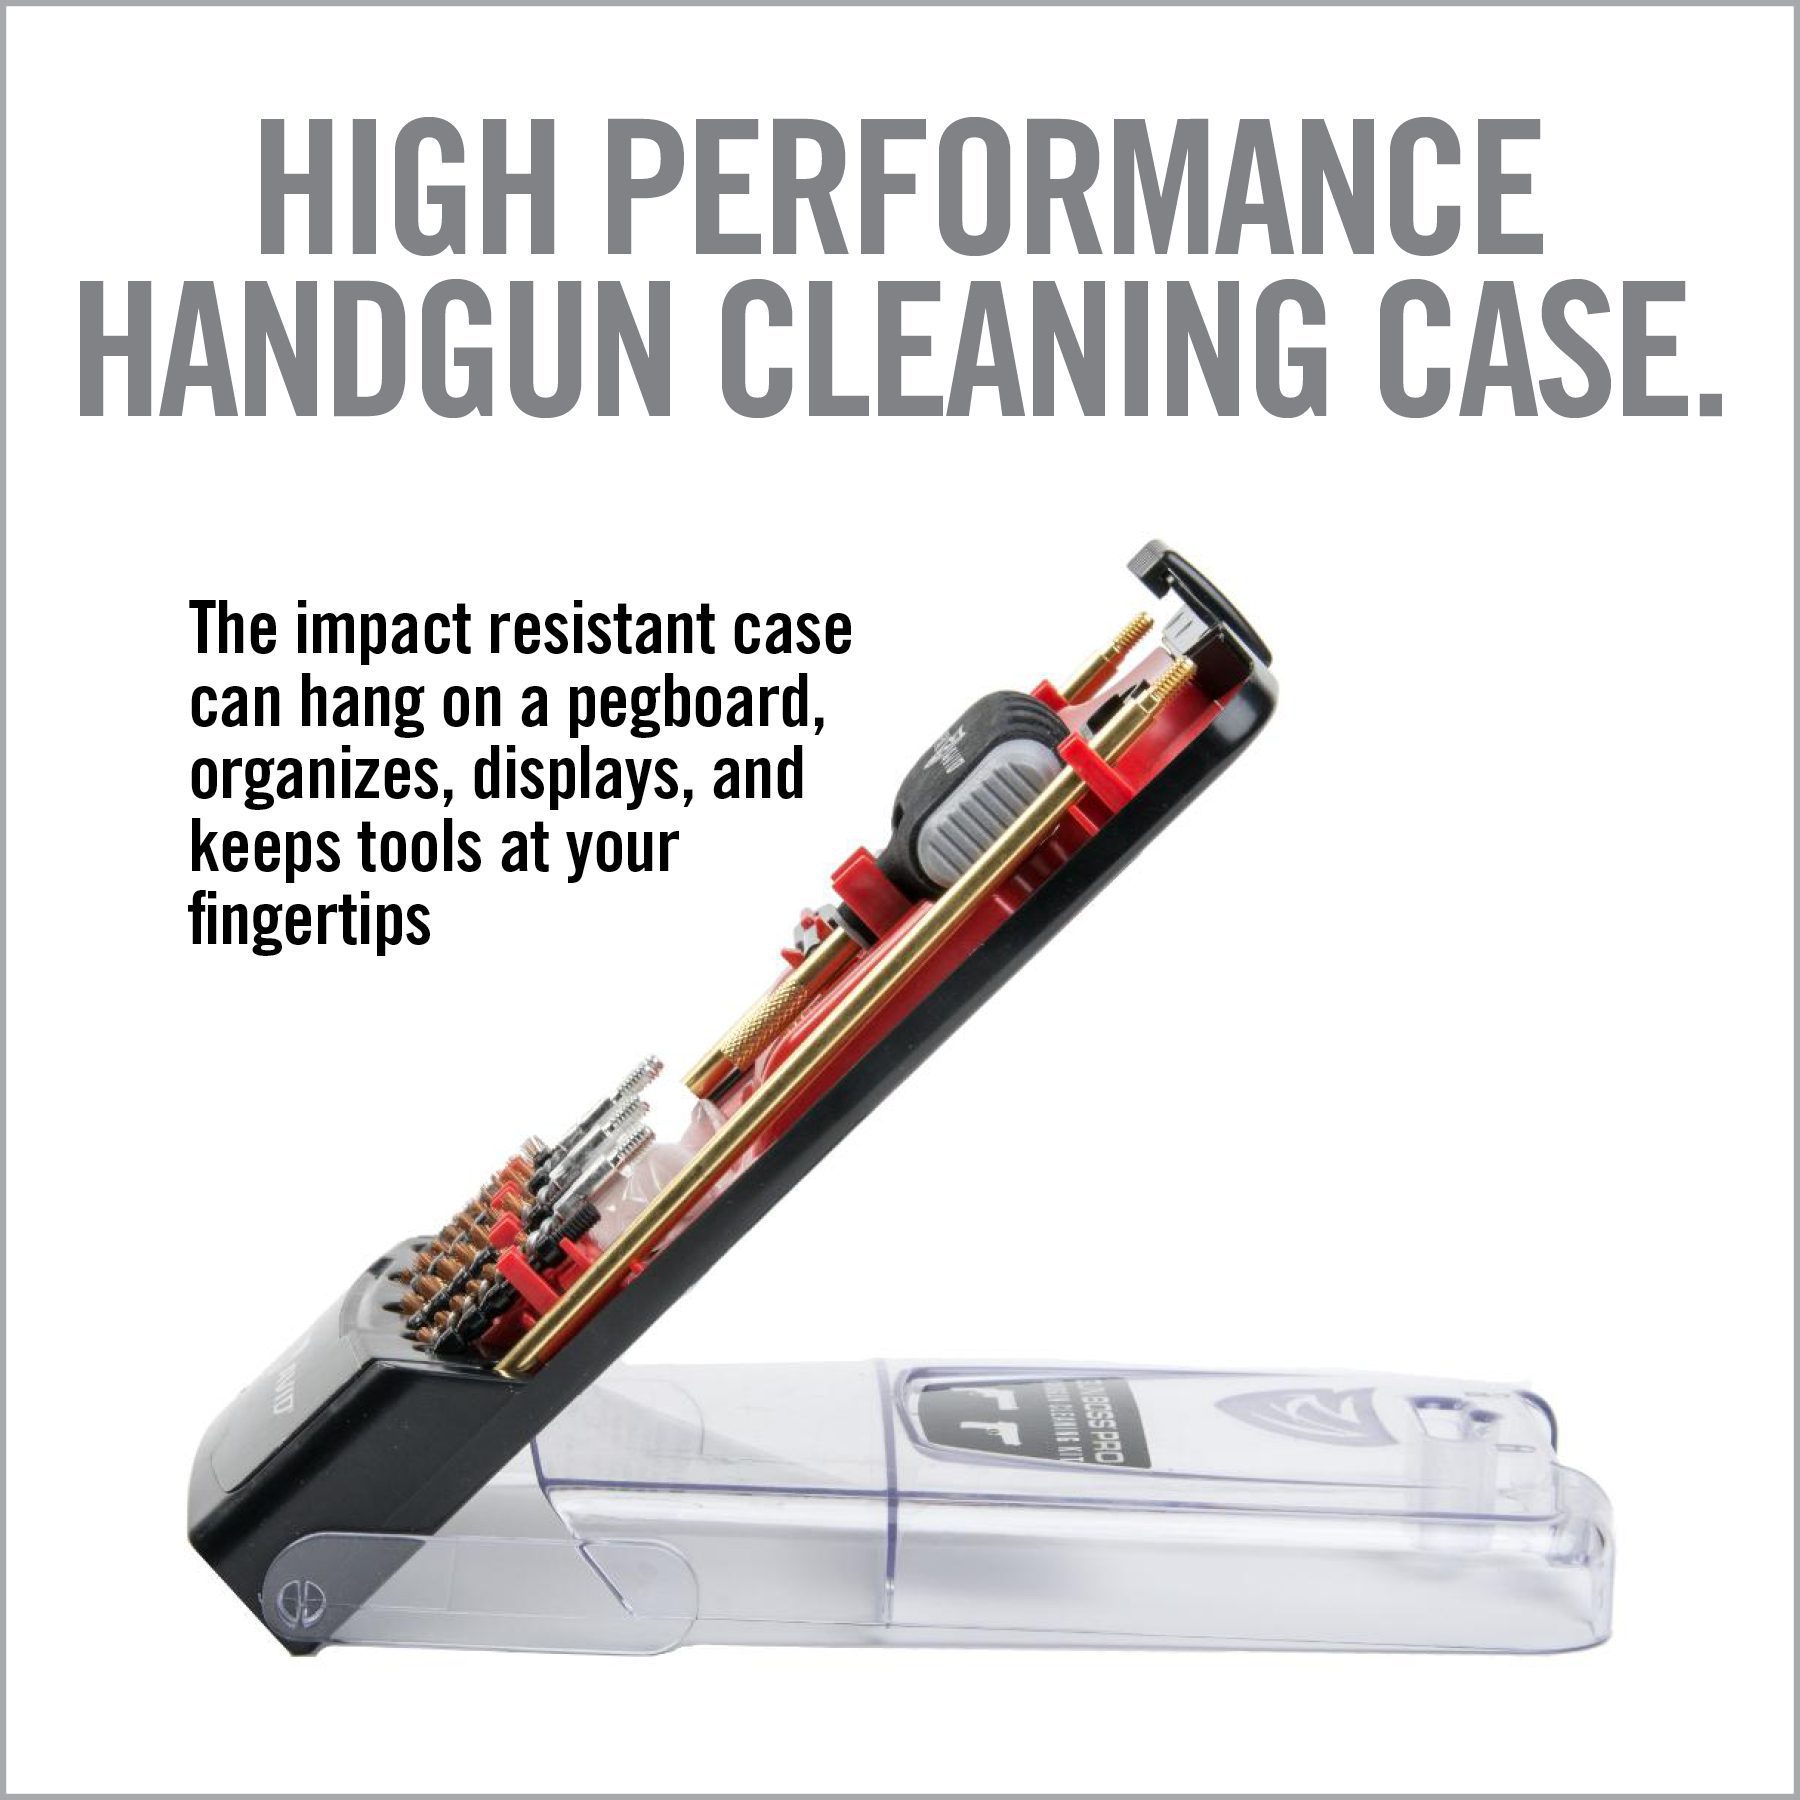 an advertisement for a high performance hand gun cleaning case